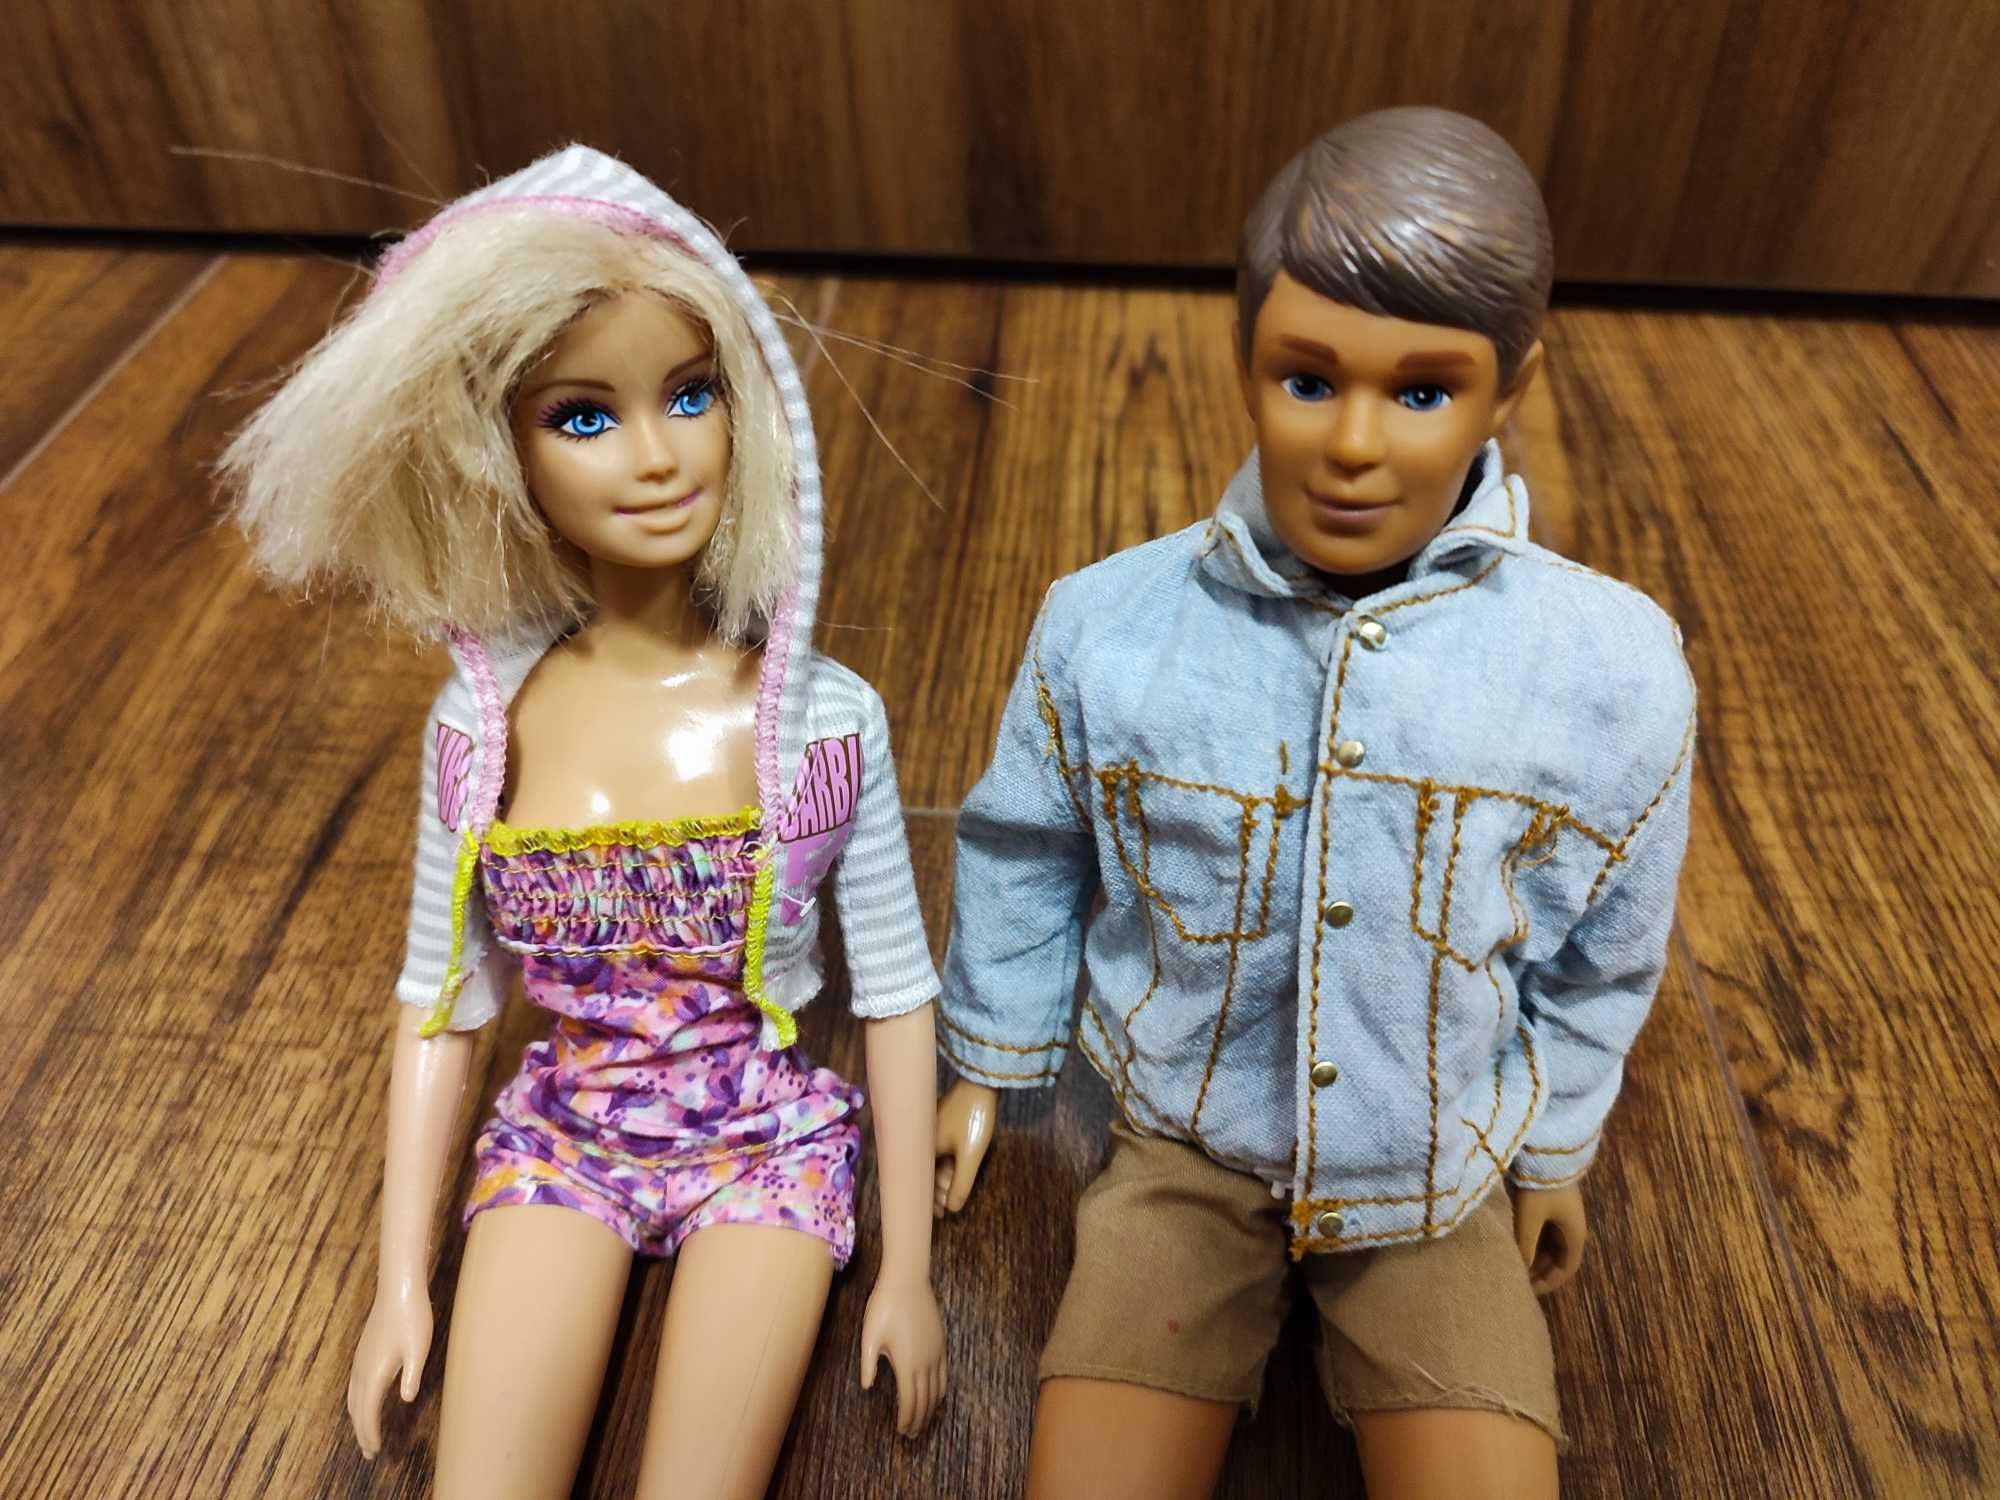 Zestaw Ken z gumy zginane kolana + lalki Barbie